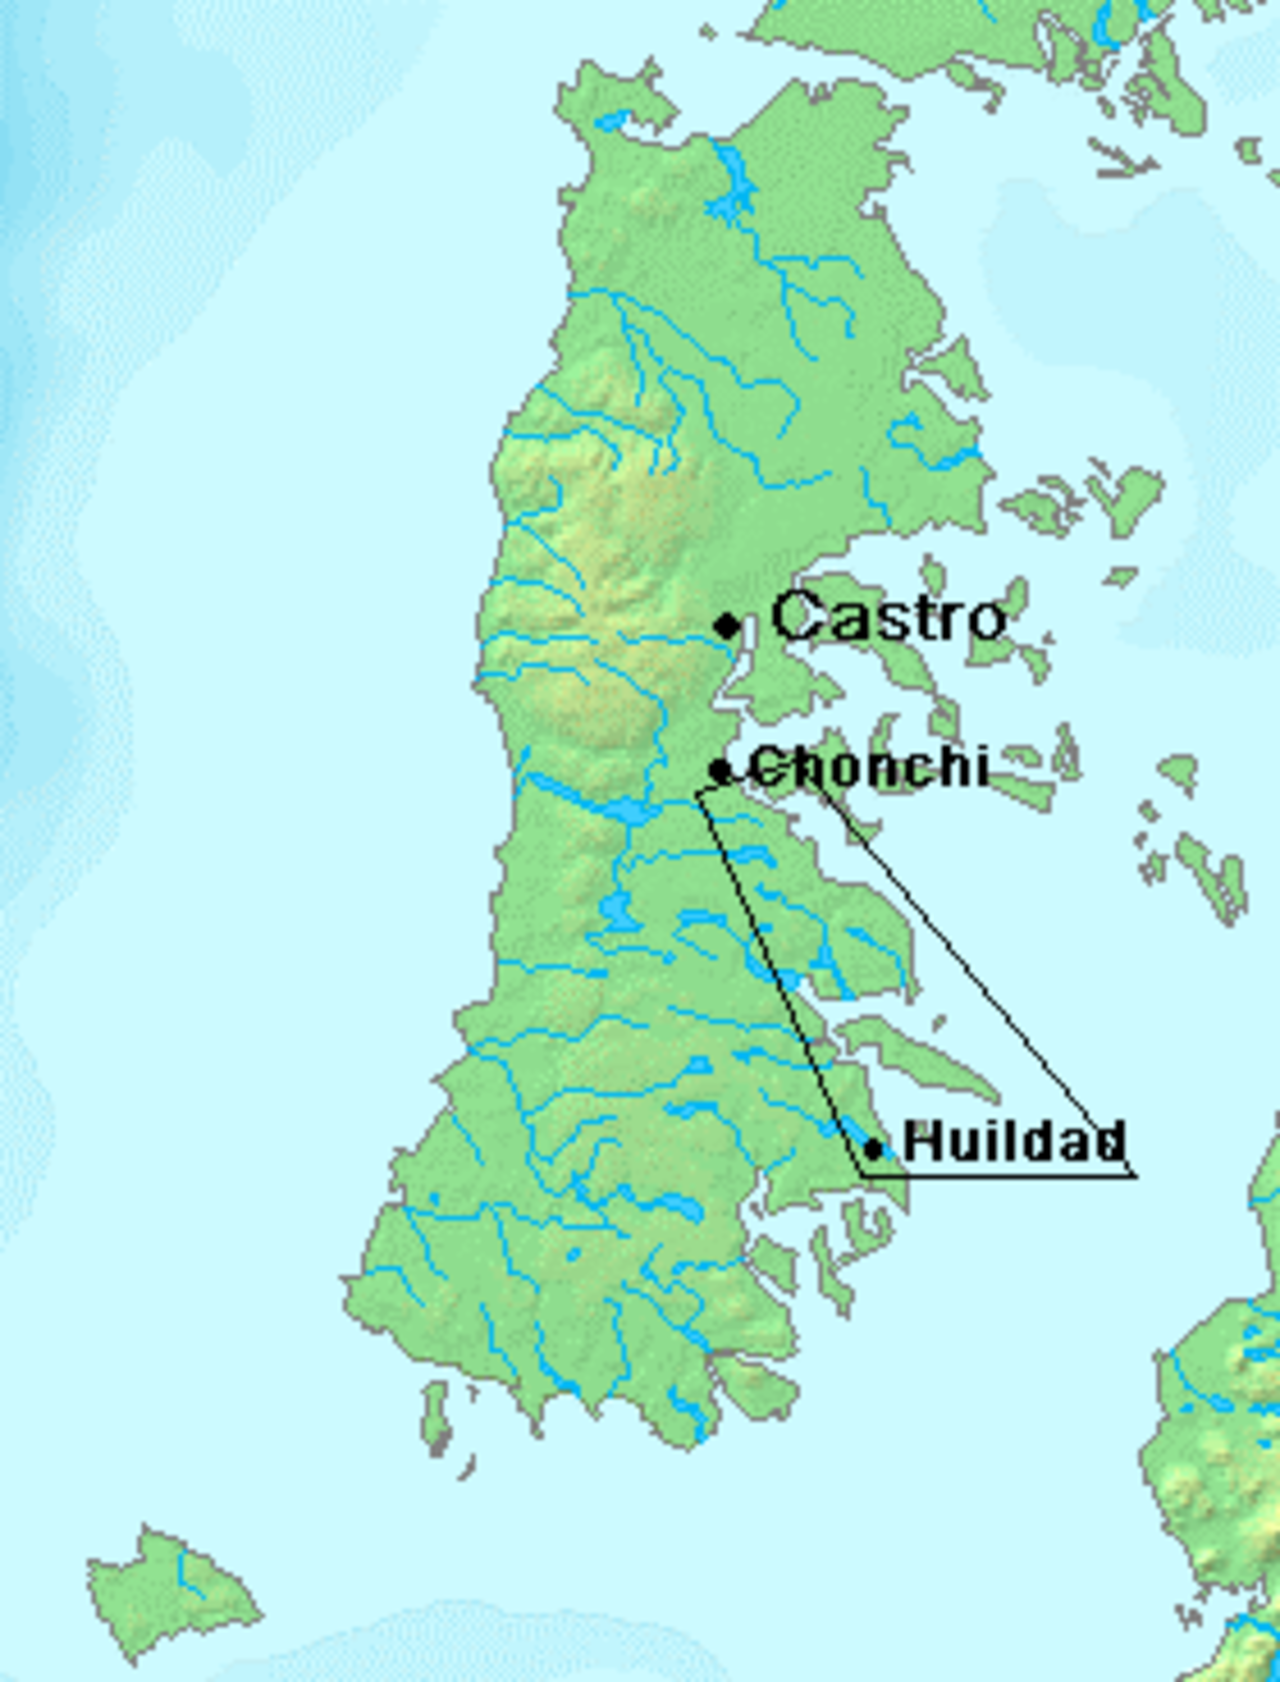 Архипелаг чилоэ - chiloé archipelago - dev.abcdef.wiki